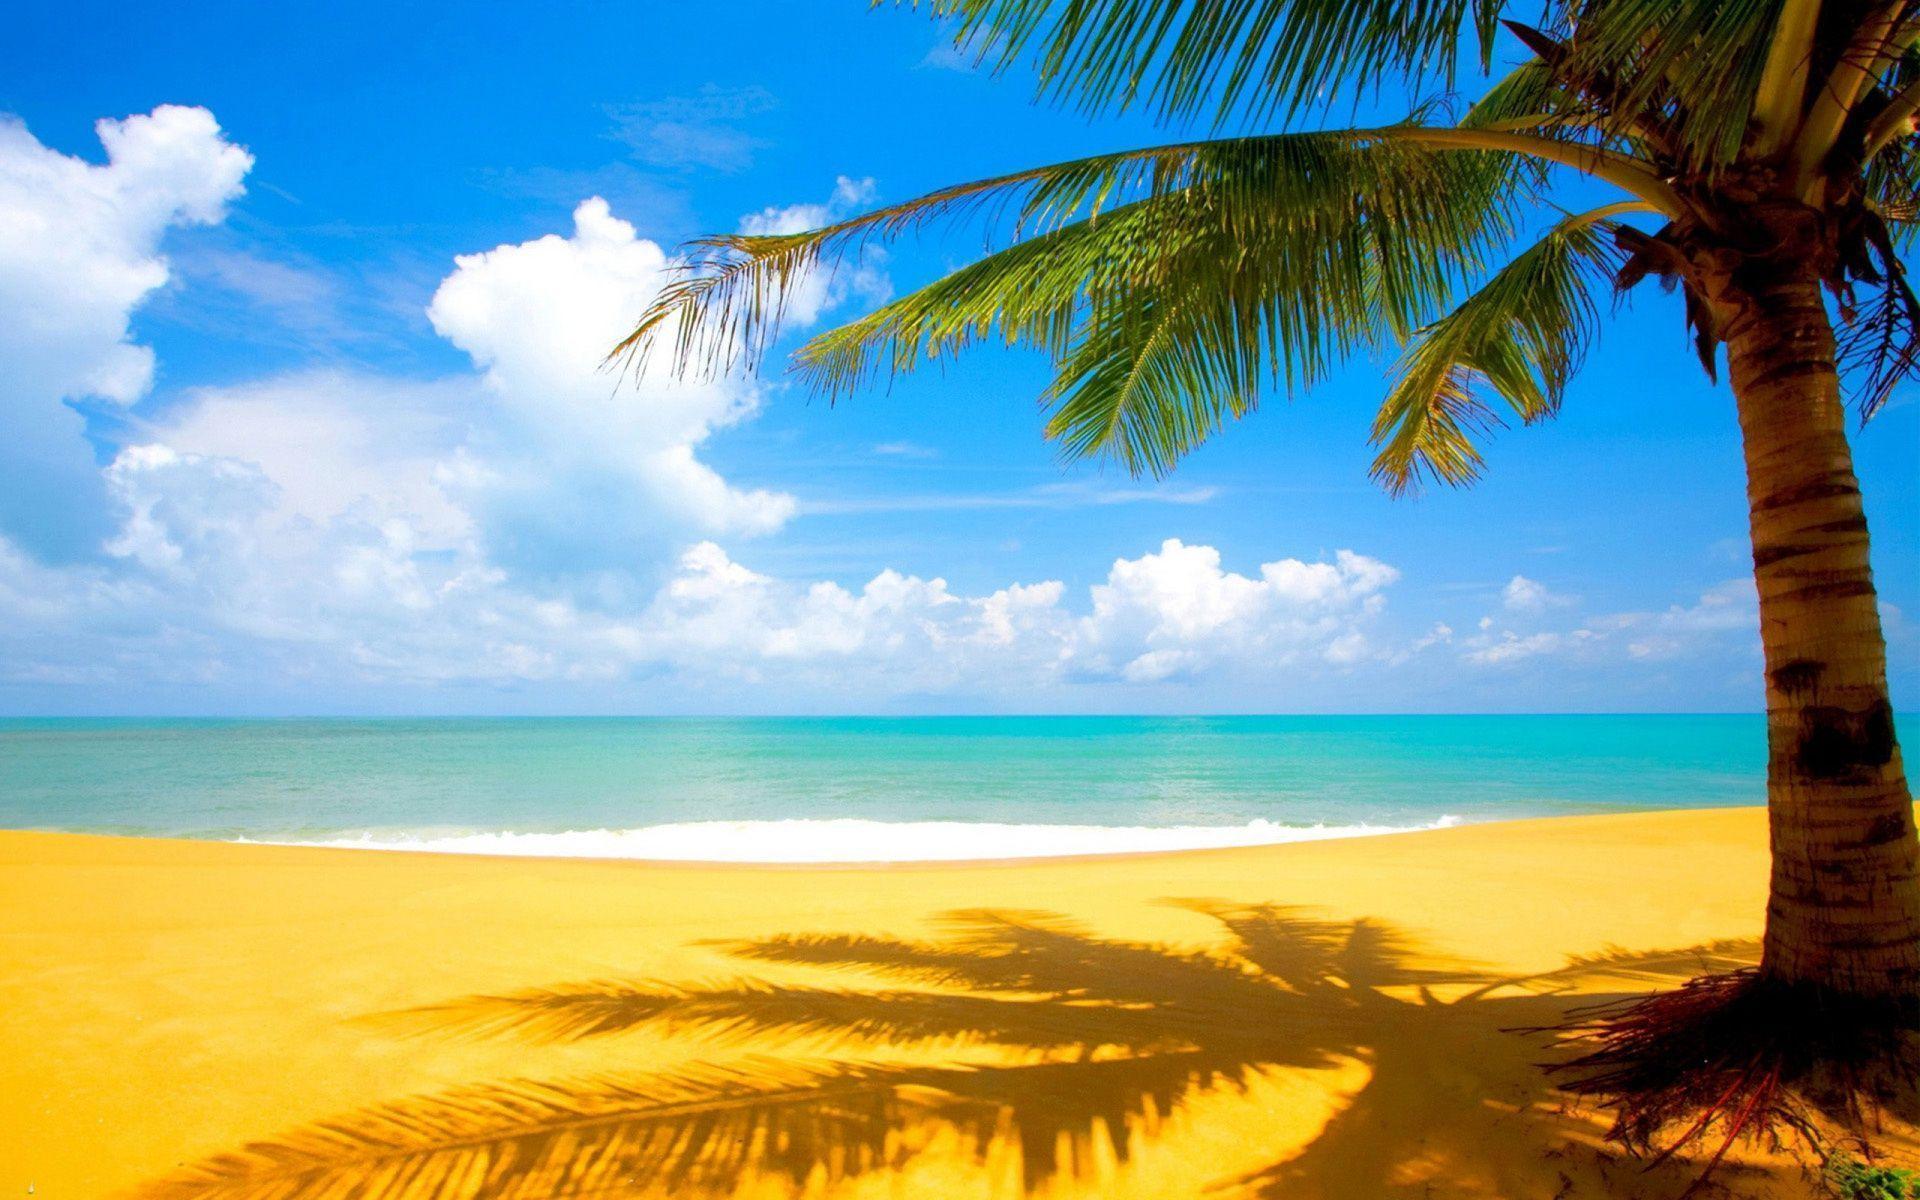 Beach Palm Tree HD Wallpaper Free Download. HD Free Wallpaper